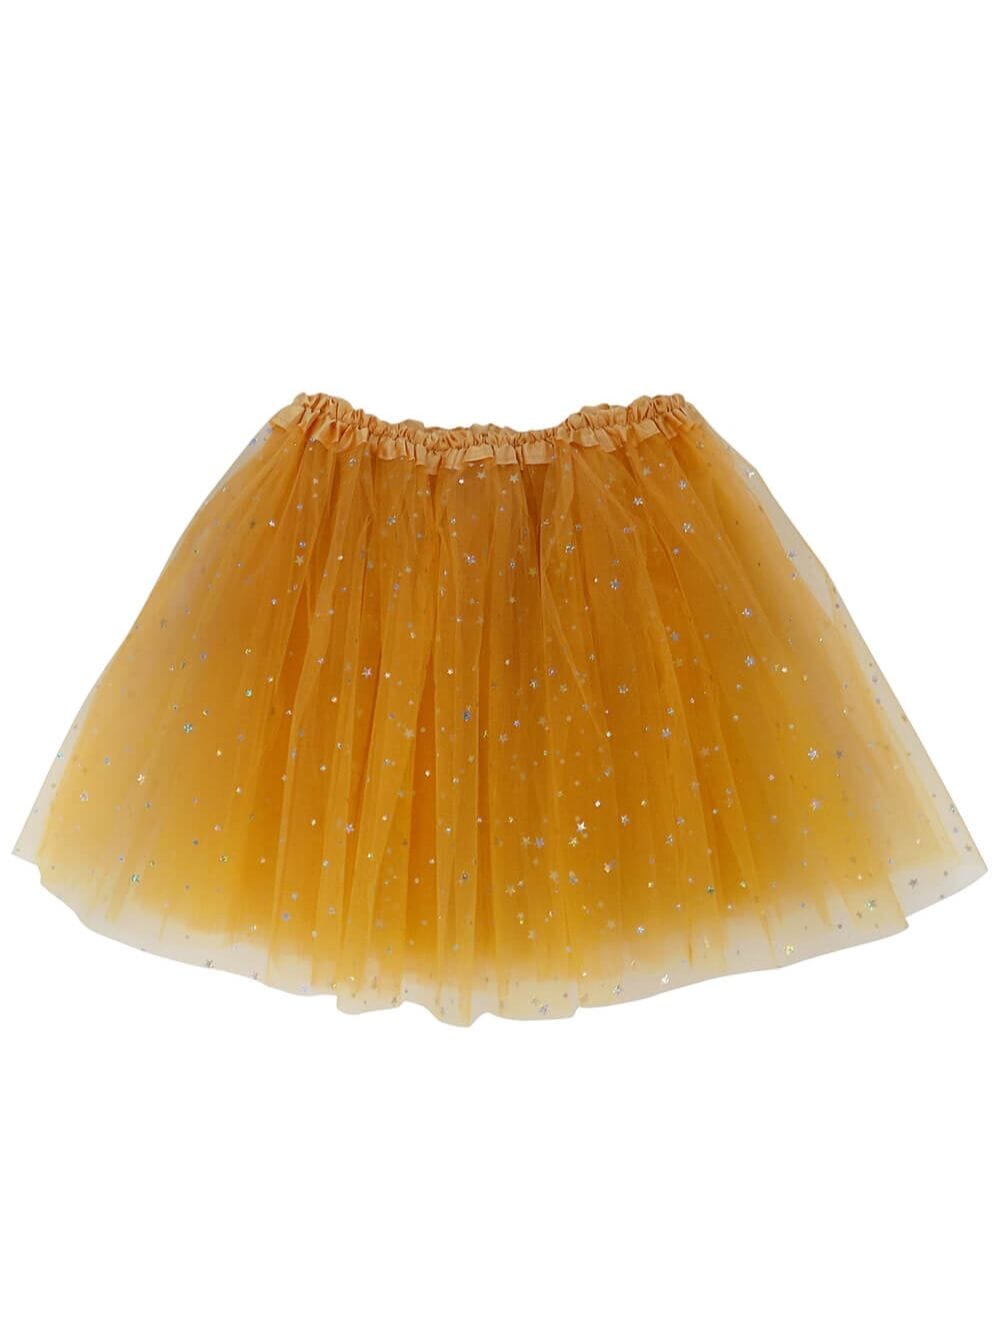 Gold Star Extra Plus Size Adult Tutu Skirt - Women's Plus Size 3- Layer Basic Ballet Costume Dance Tutus - Sydney So Sweet